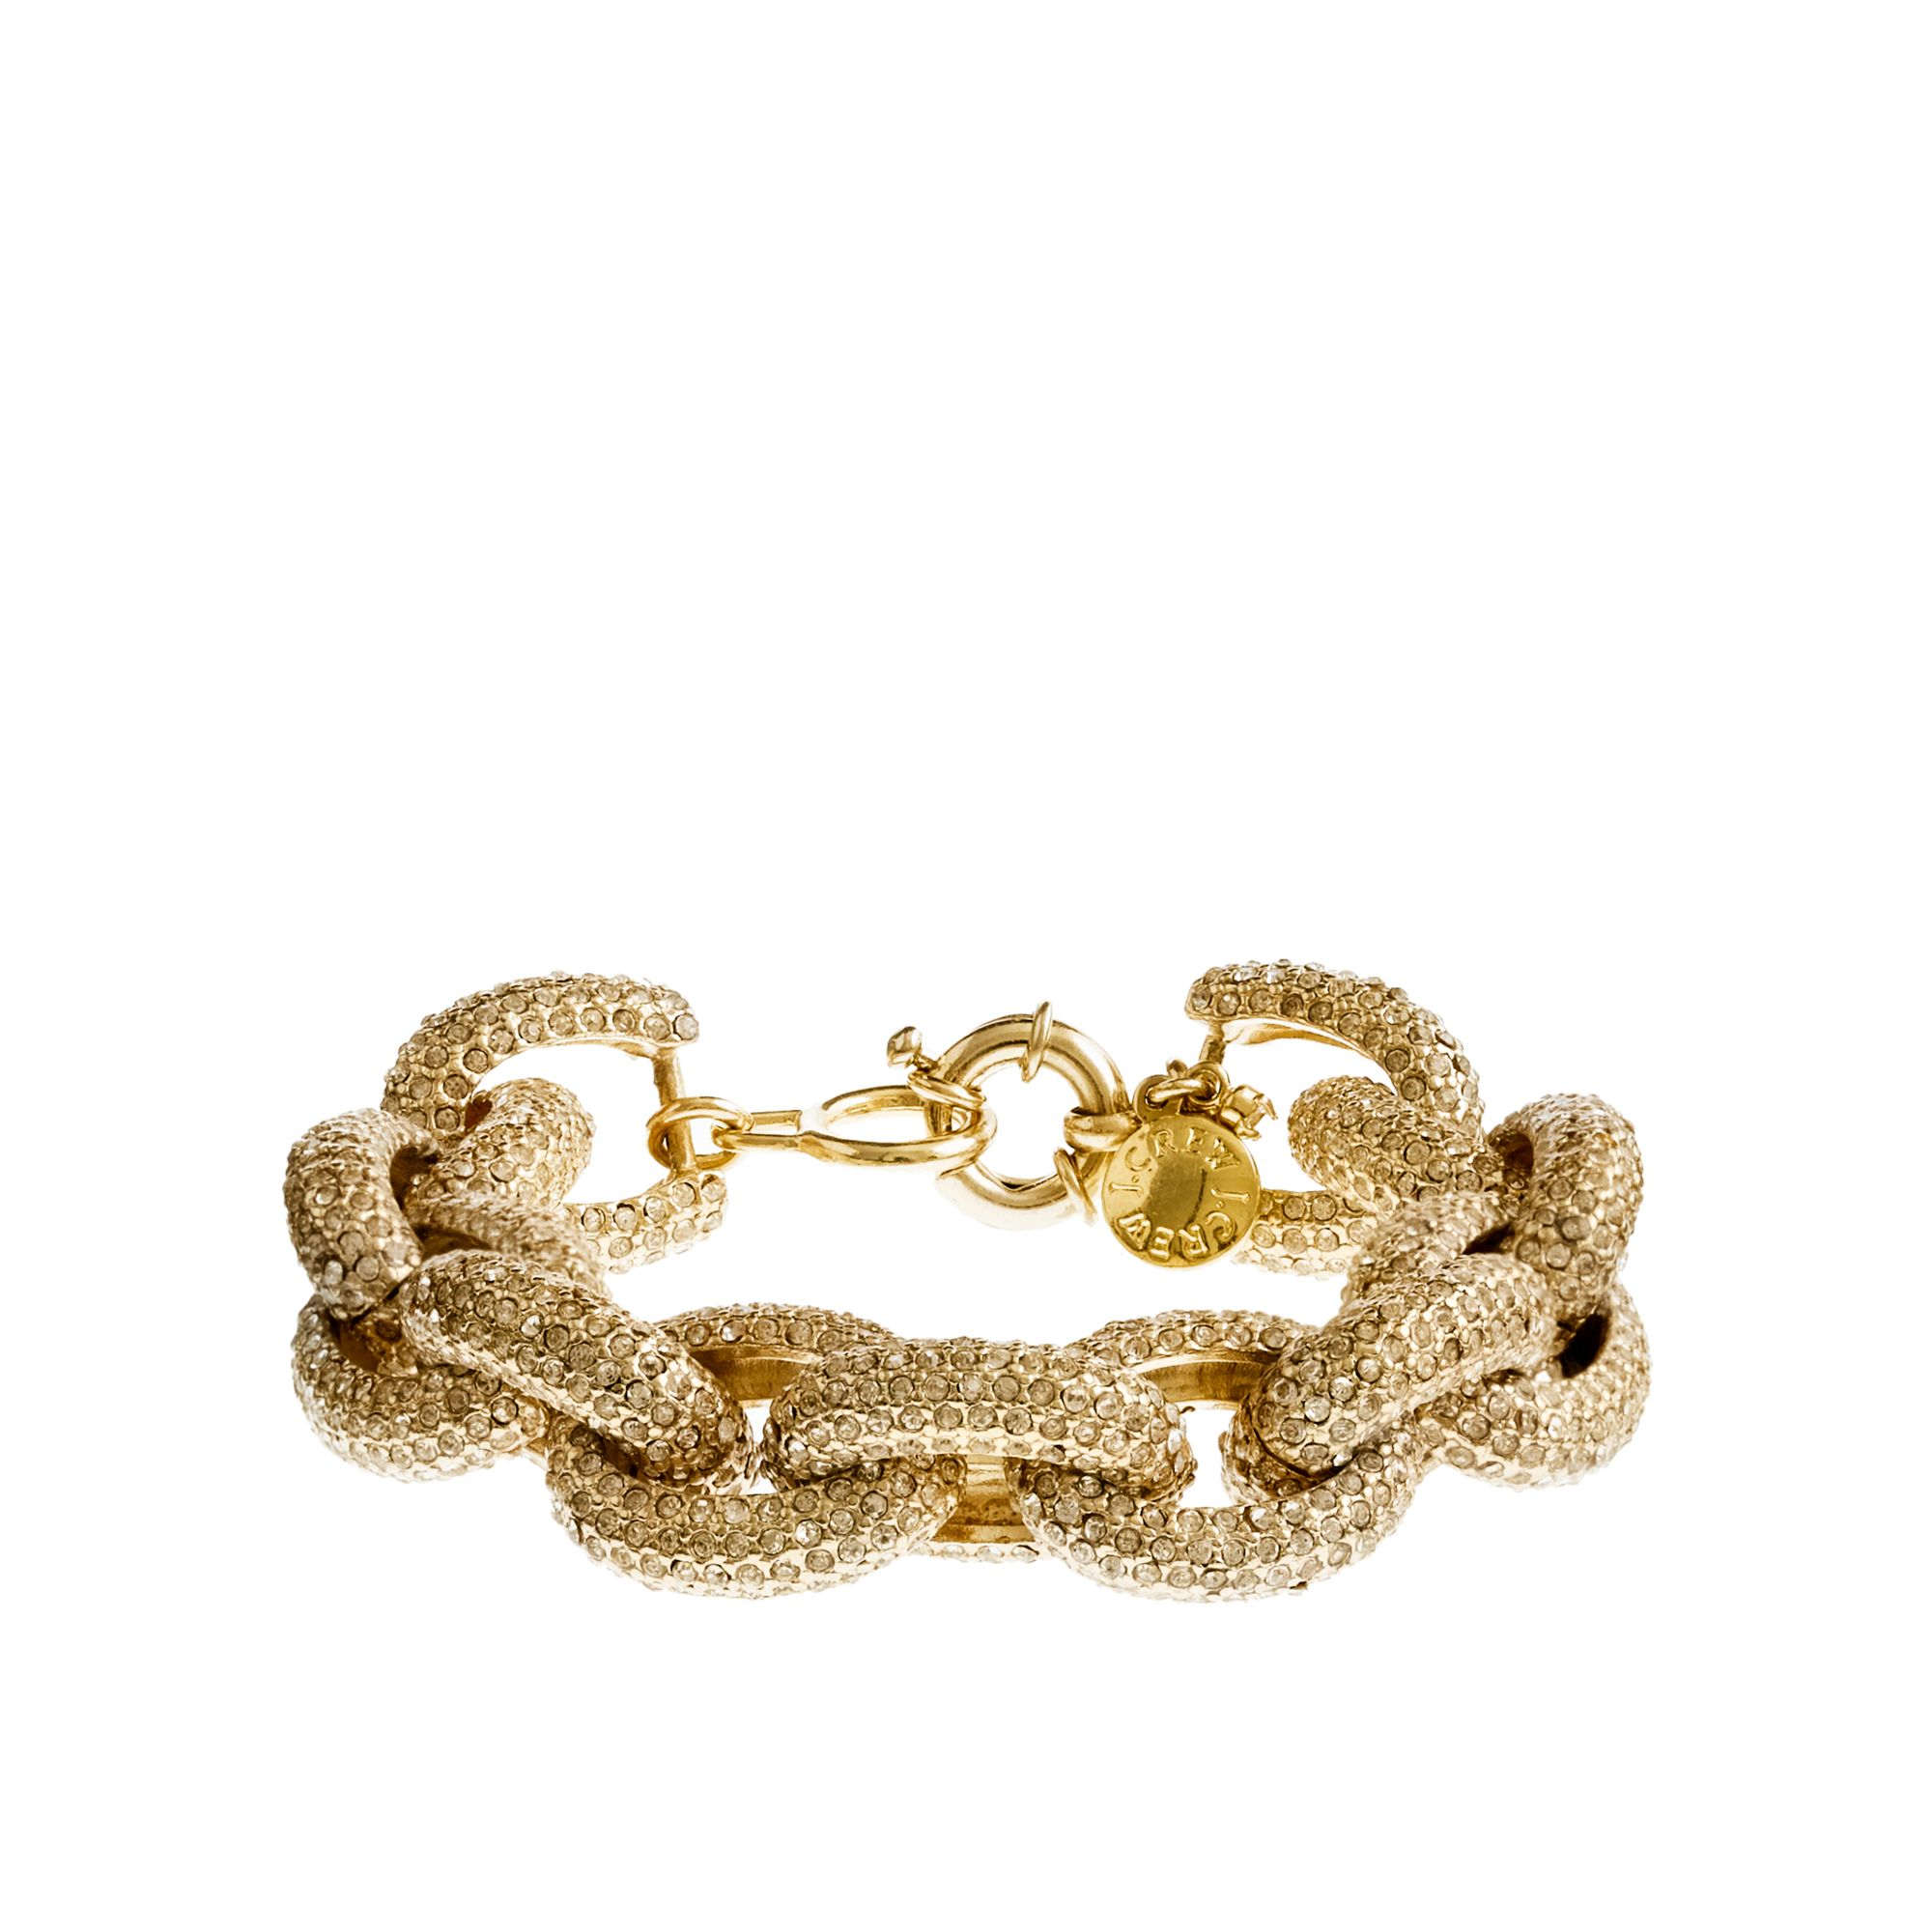 J.crew Classic Pavé Link Bracelet in Gold (crystal) | Lyst